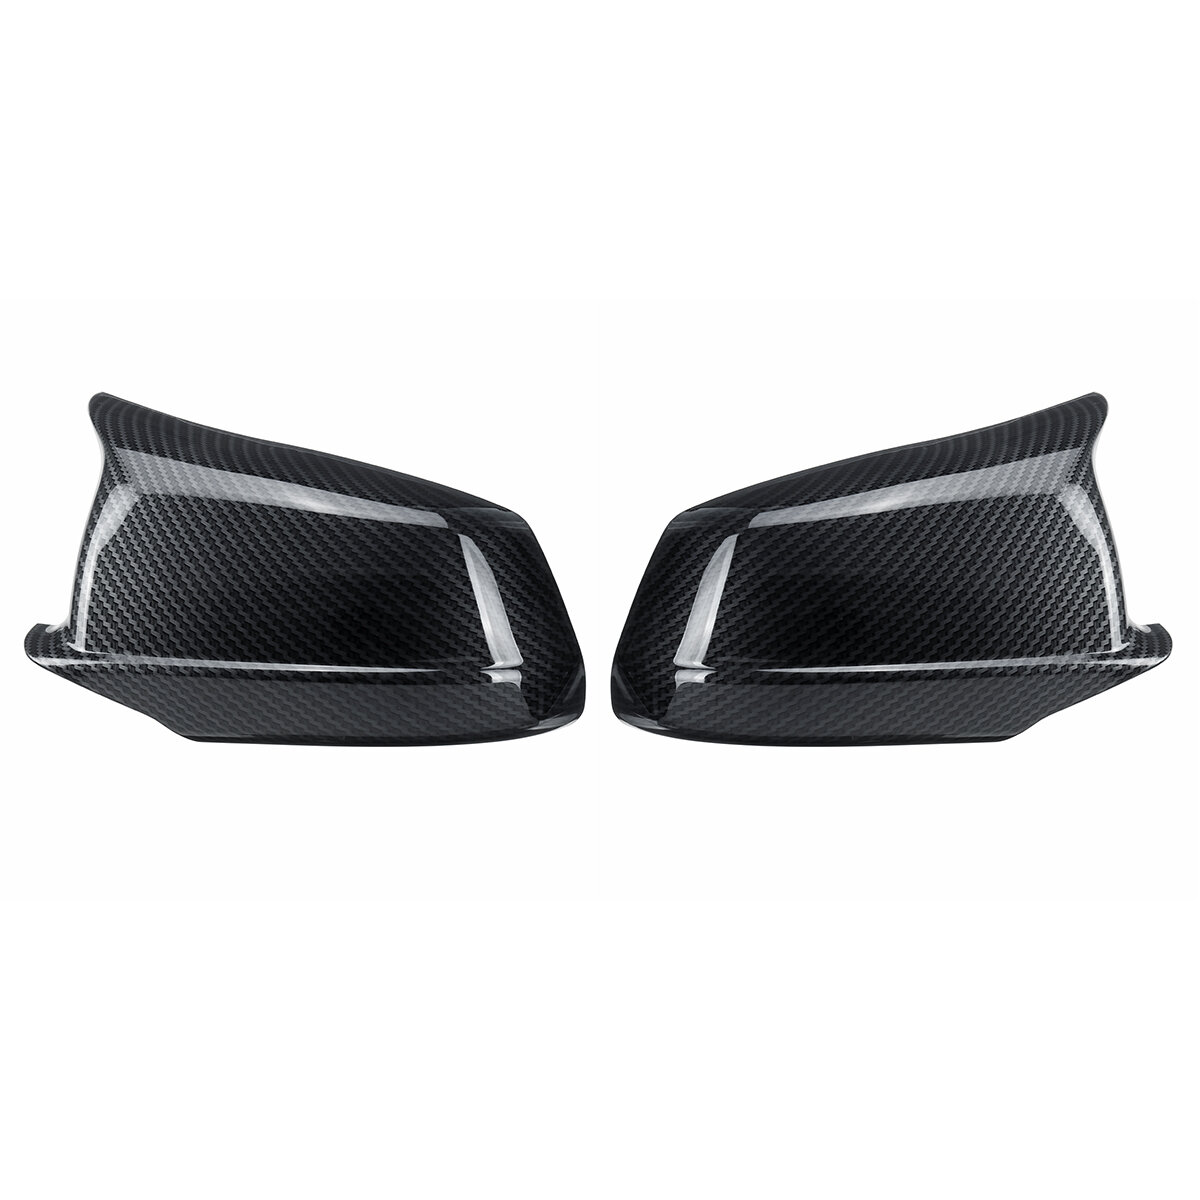 

2Pcs Car Carbon Fiber Rear View Mirror Caps Covers For Bmw 5 Series F10 F11 F18 2011-2013